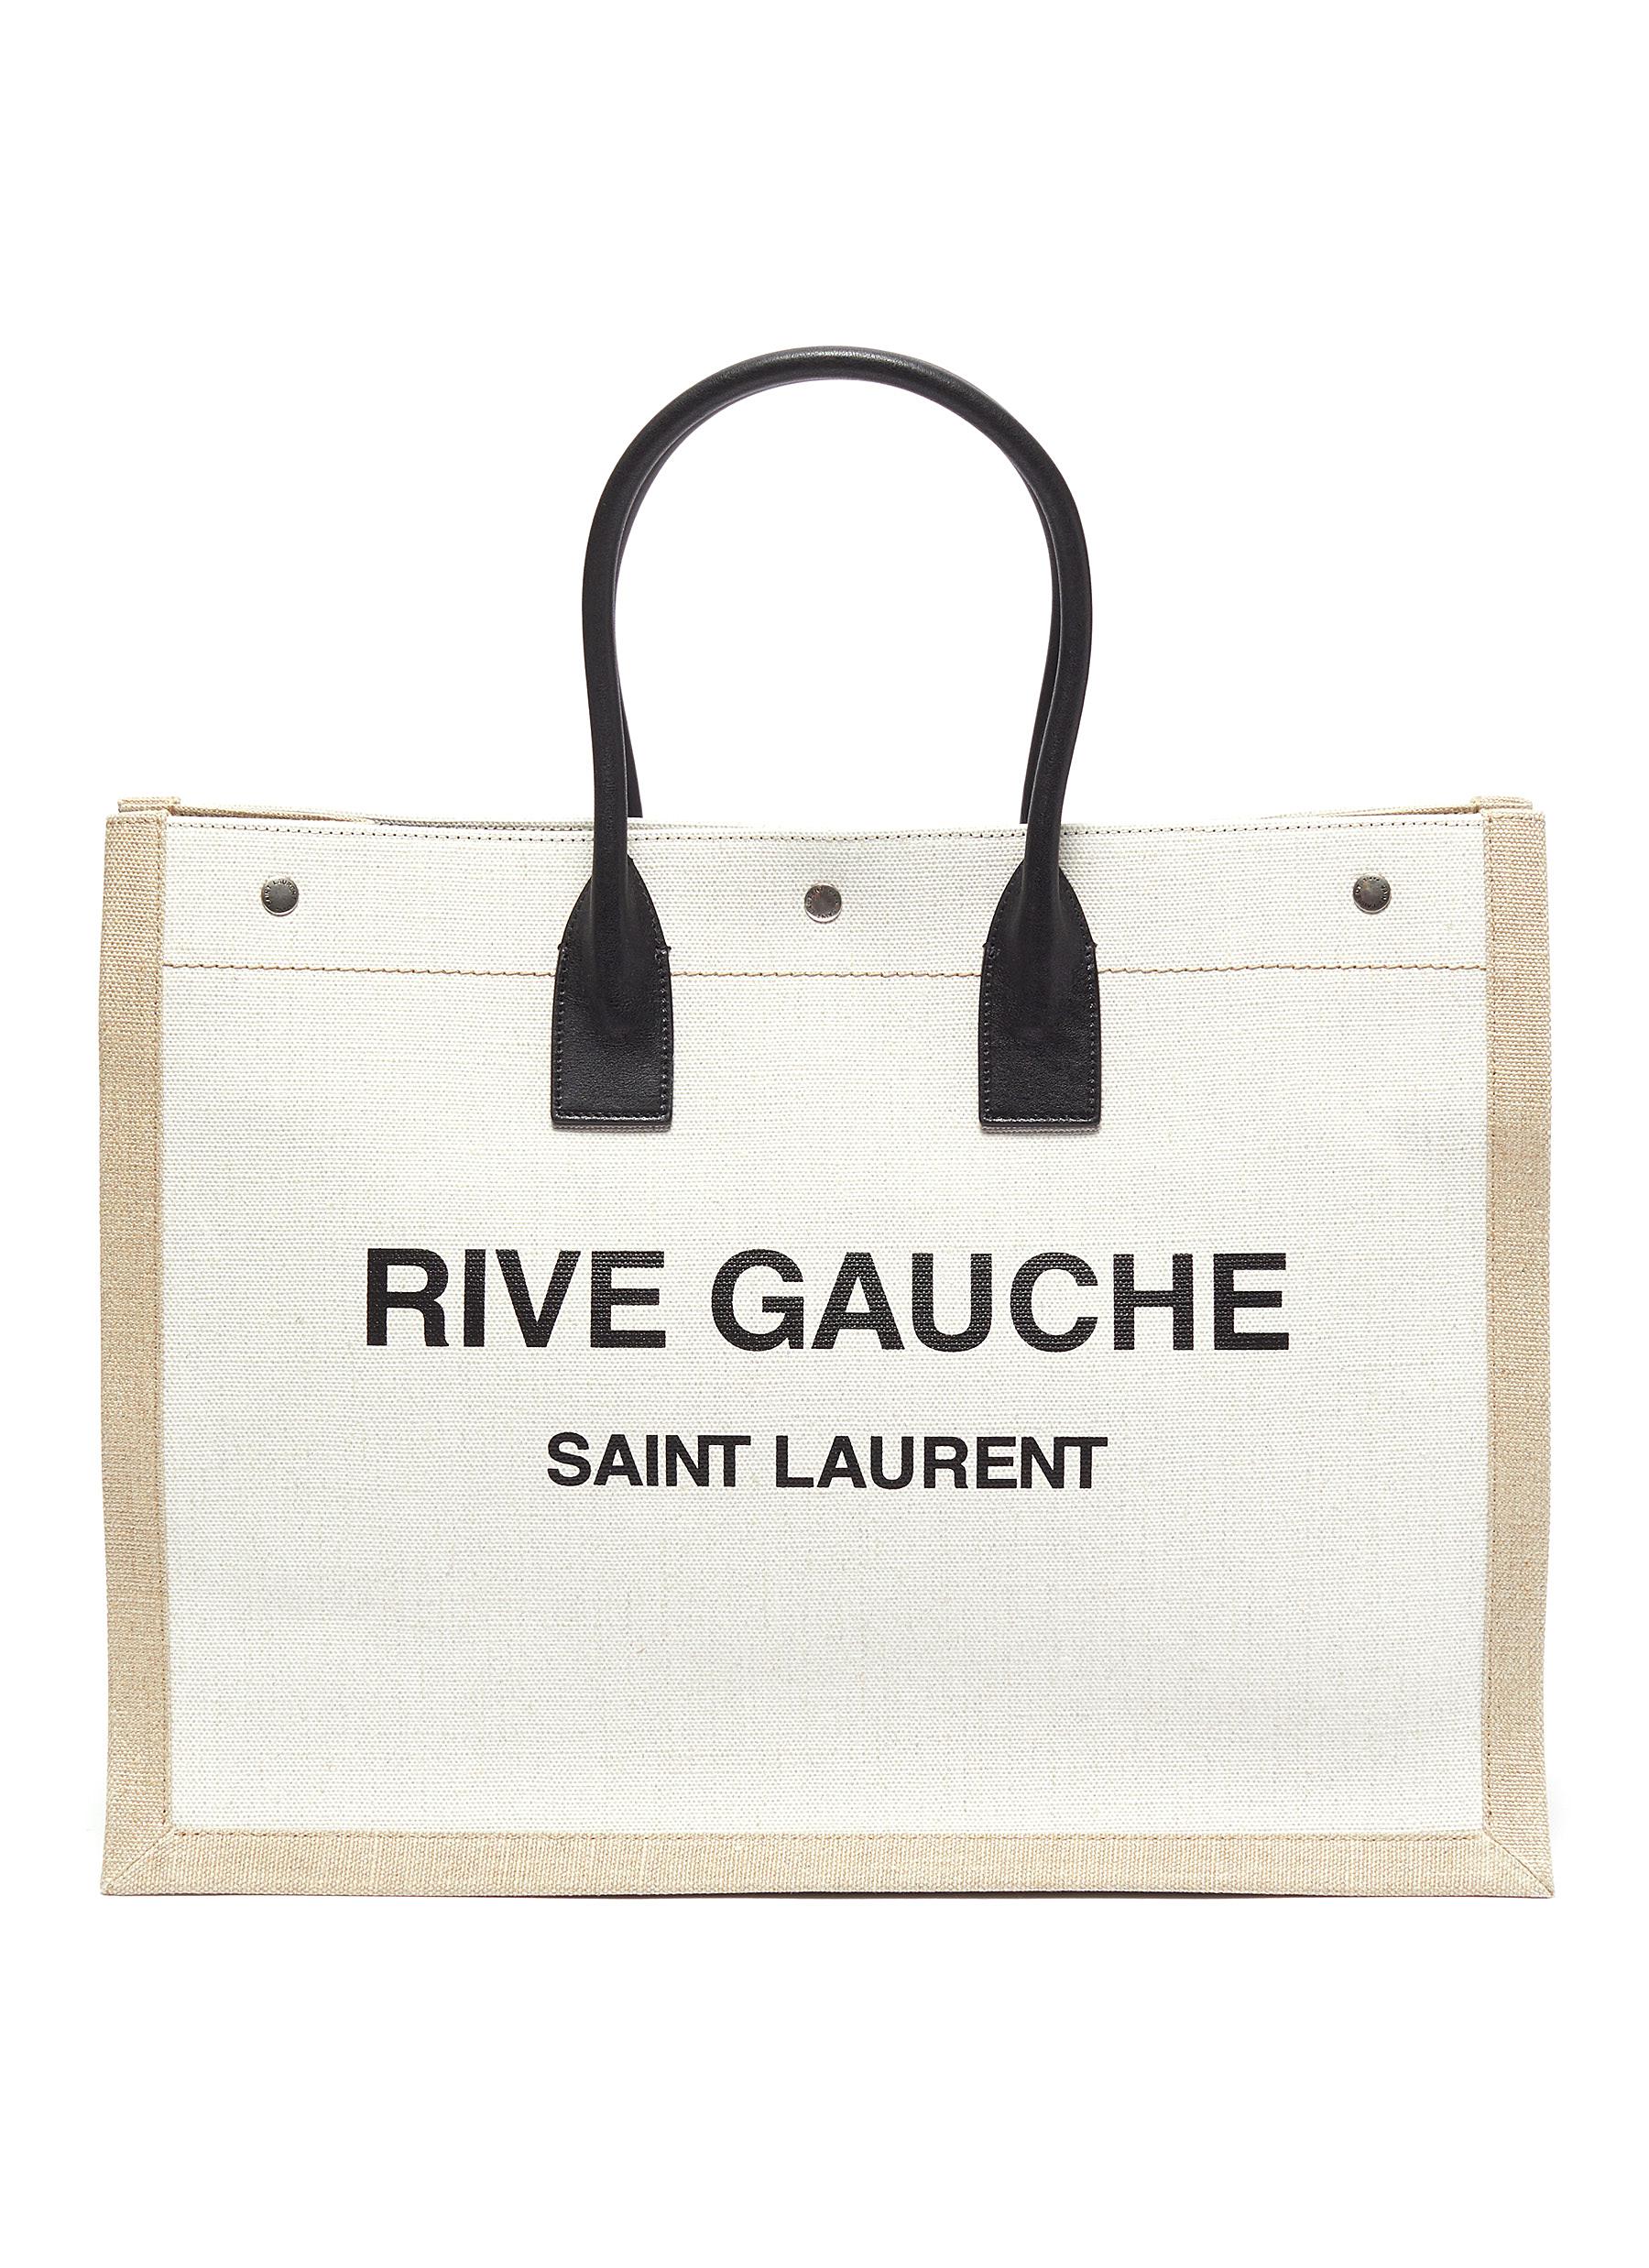 Saint Laurent Rive Gauche Bag on Sale, 50% OFF | lagence.tv